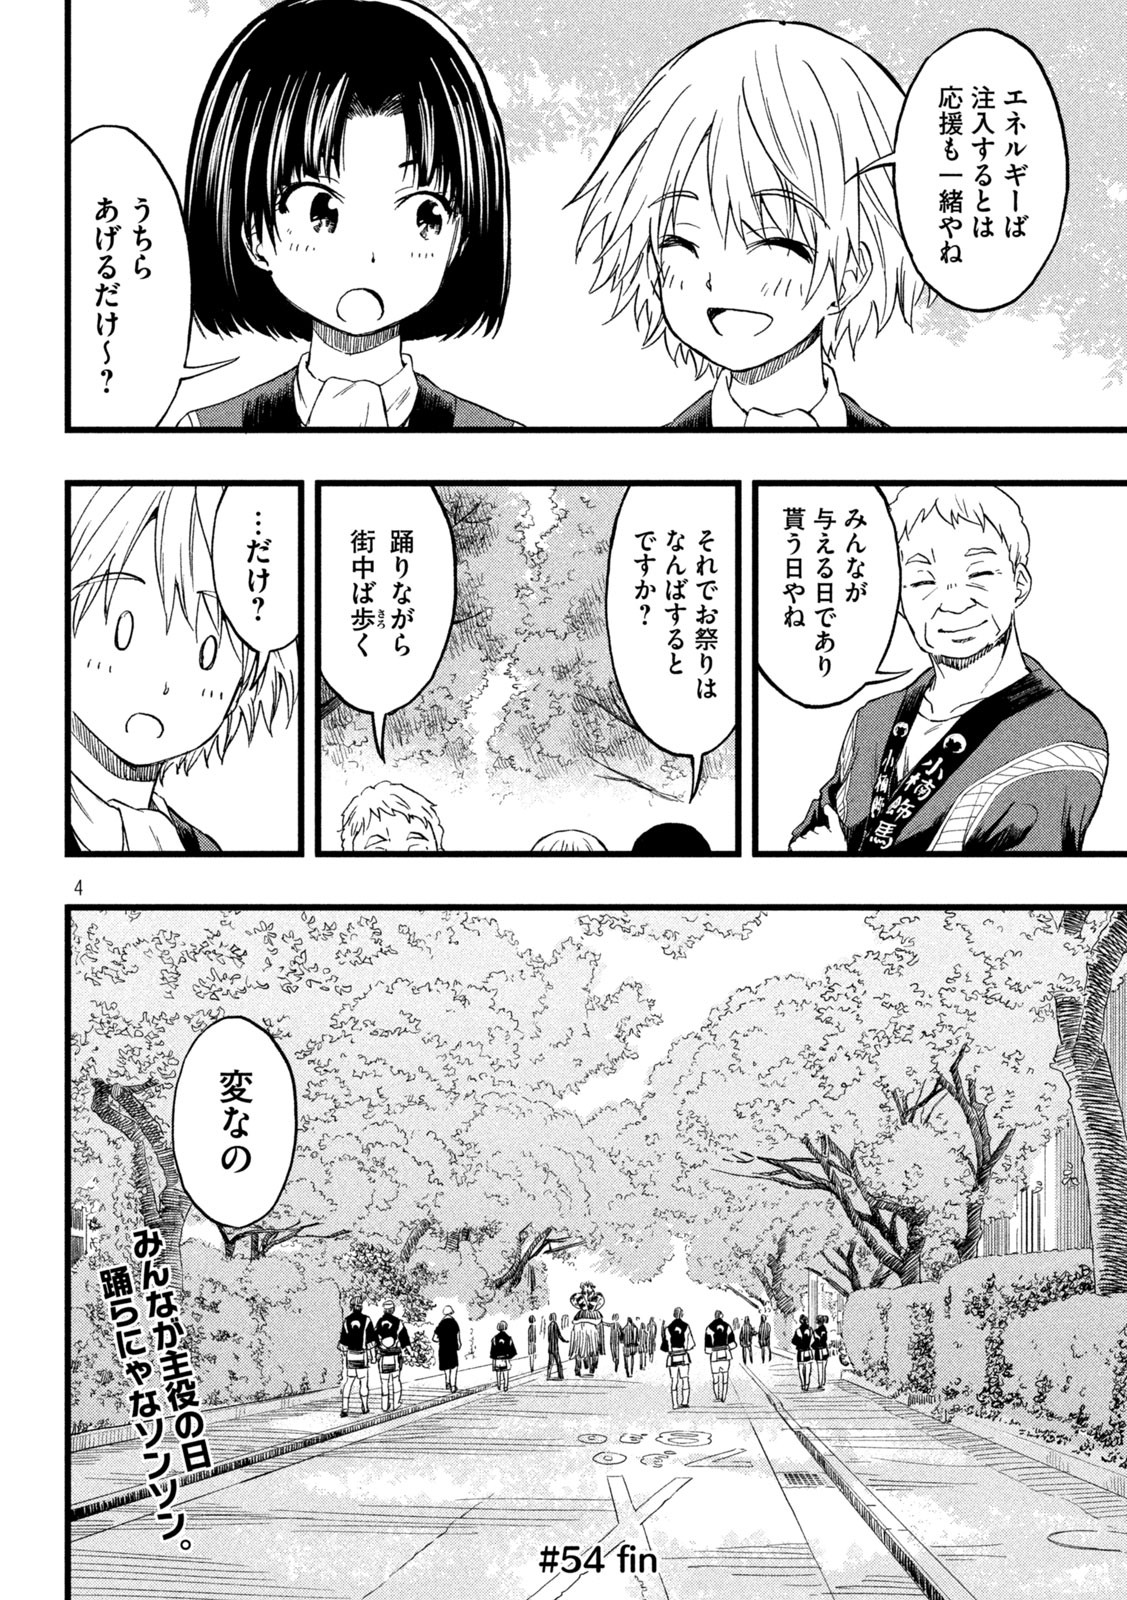 Koharu haru! - Chapter 54 - Page 4